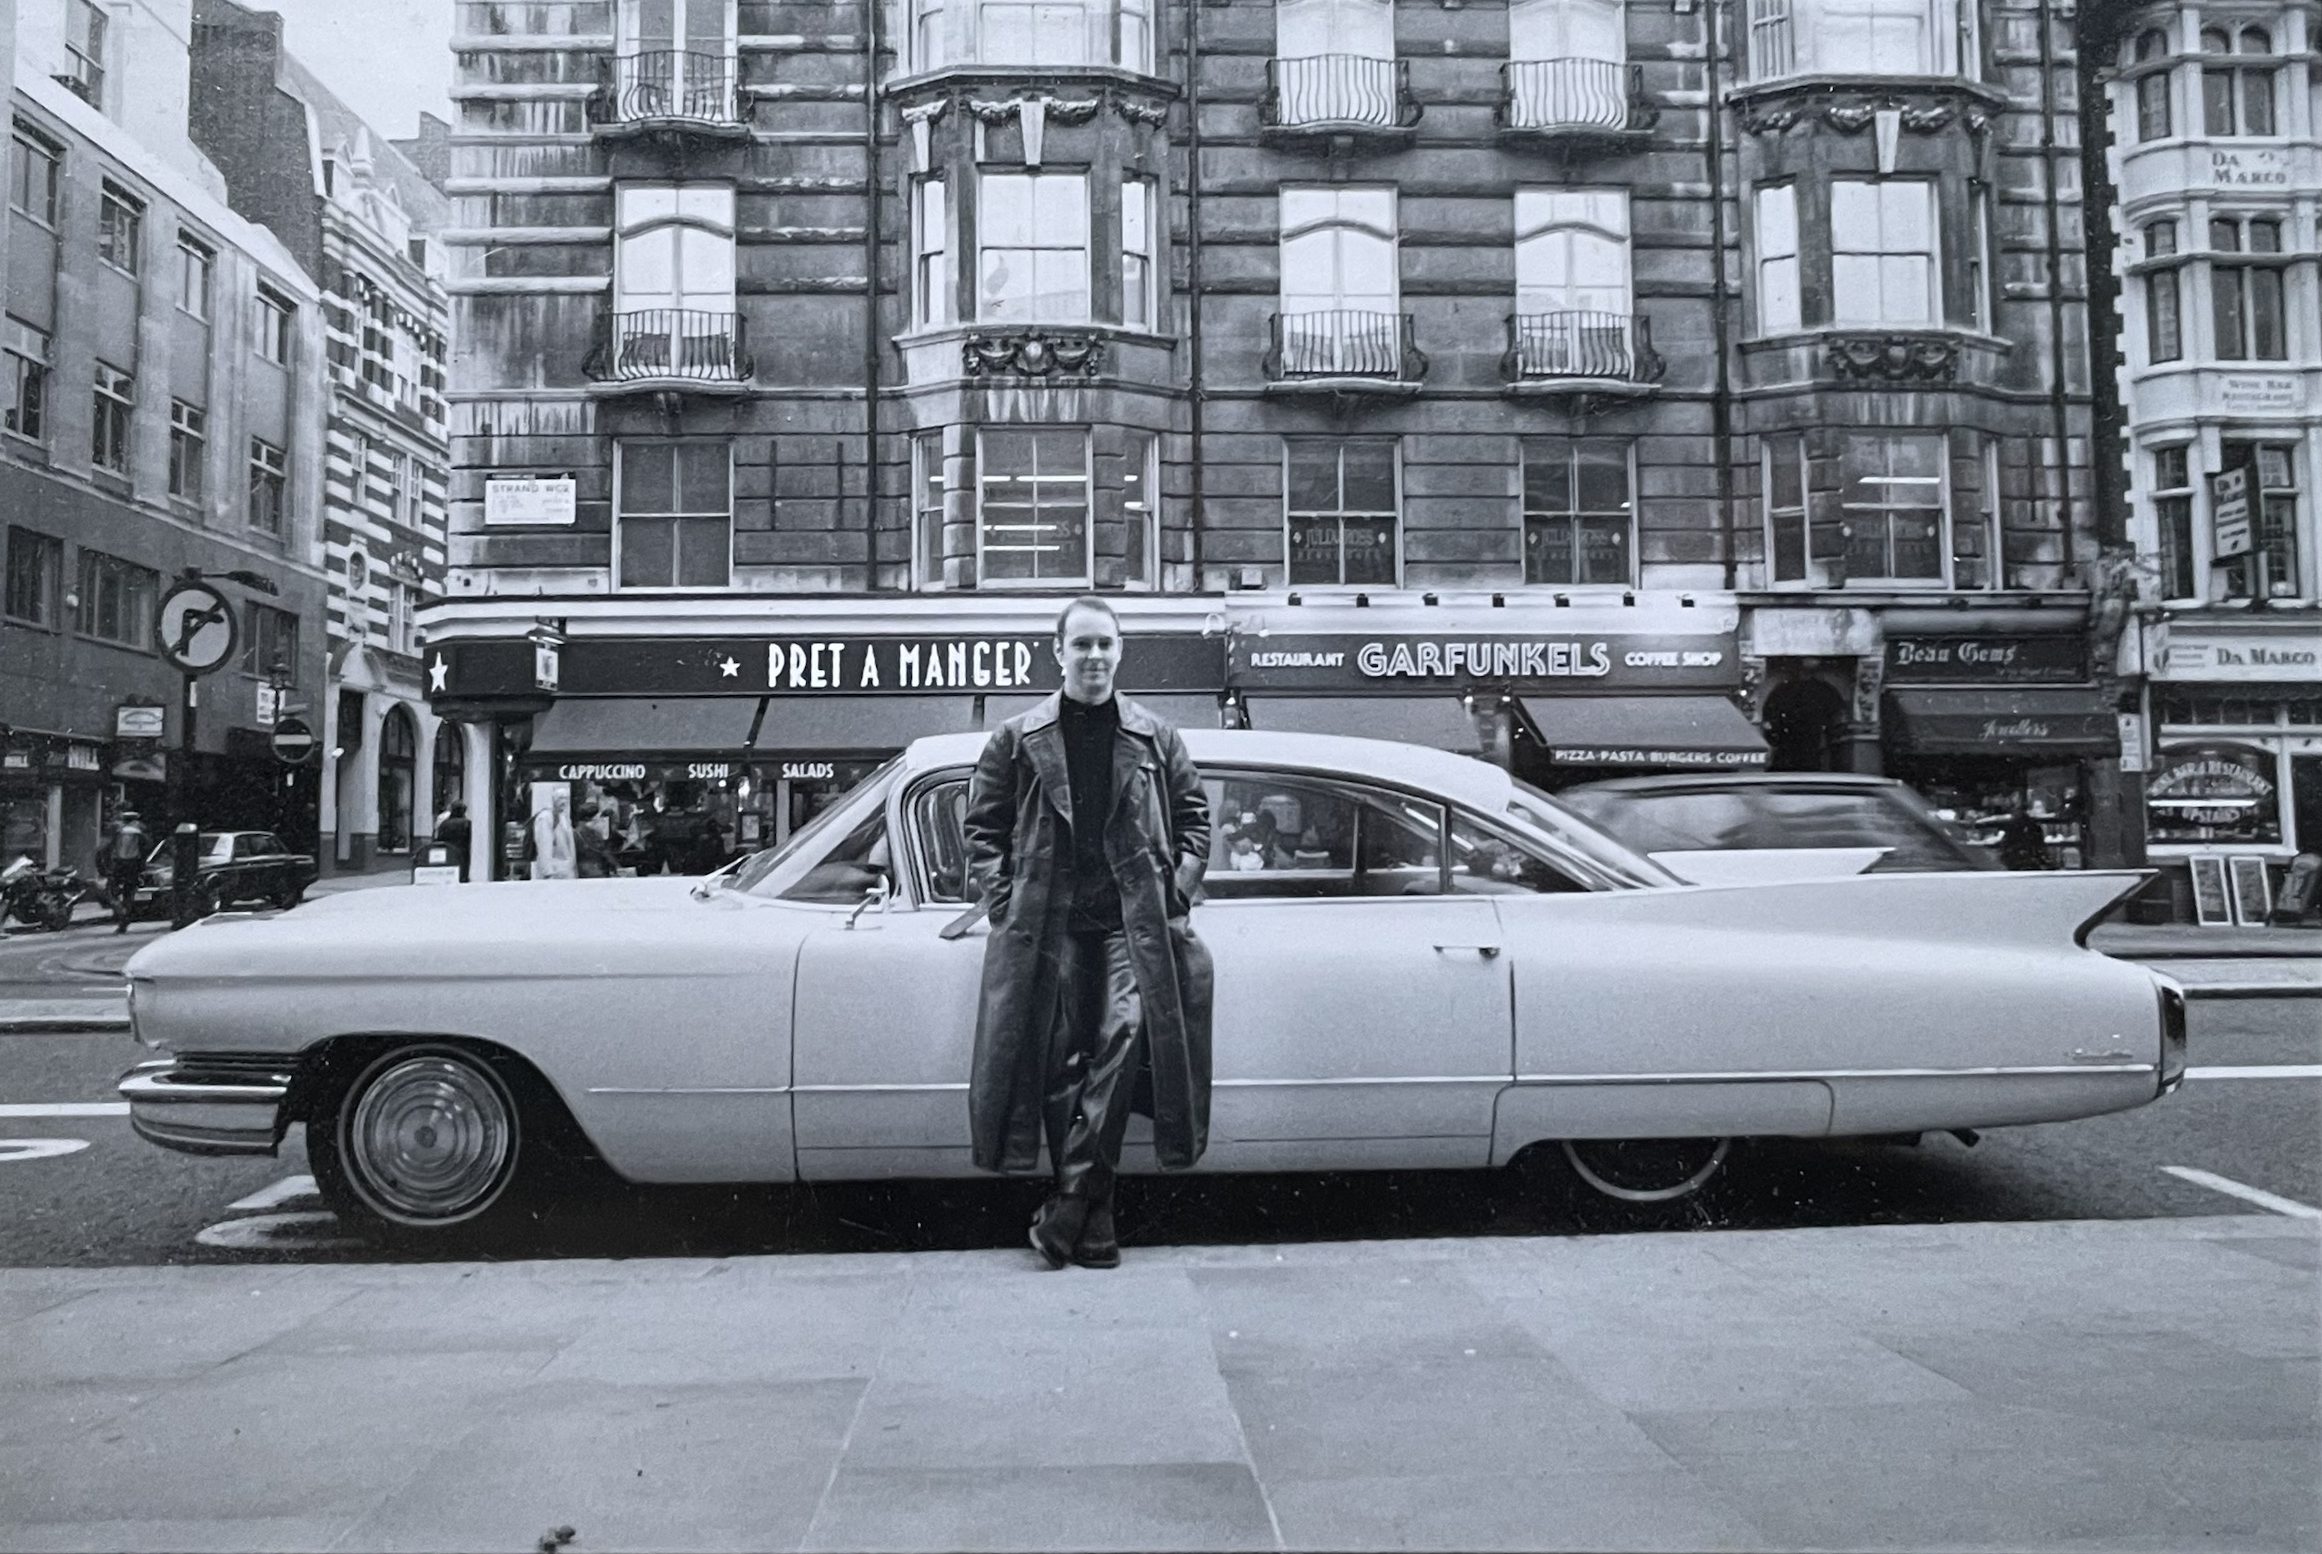 The One That Got Away: Marc Allum's 1960 Cadillac Sedan de Ville